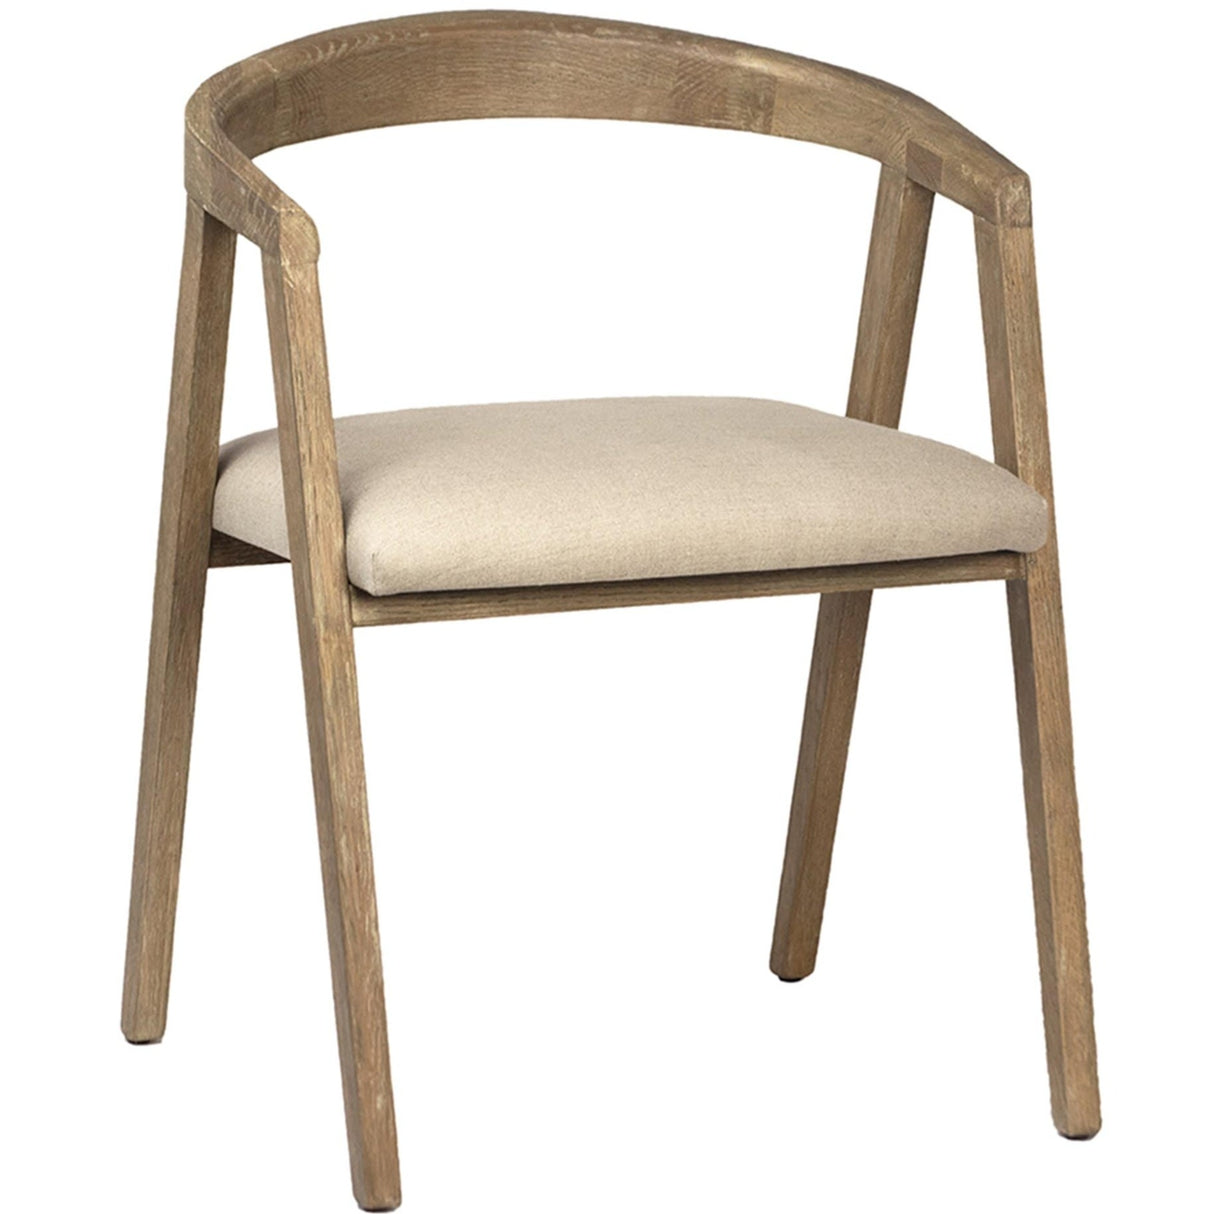 Dovetail Jensen Dining Chair Furniture dovetail-DOV9252